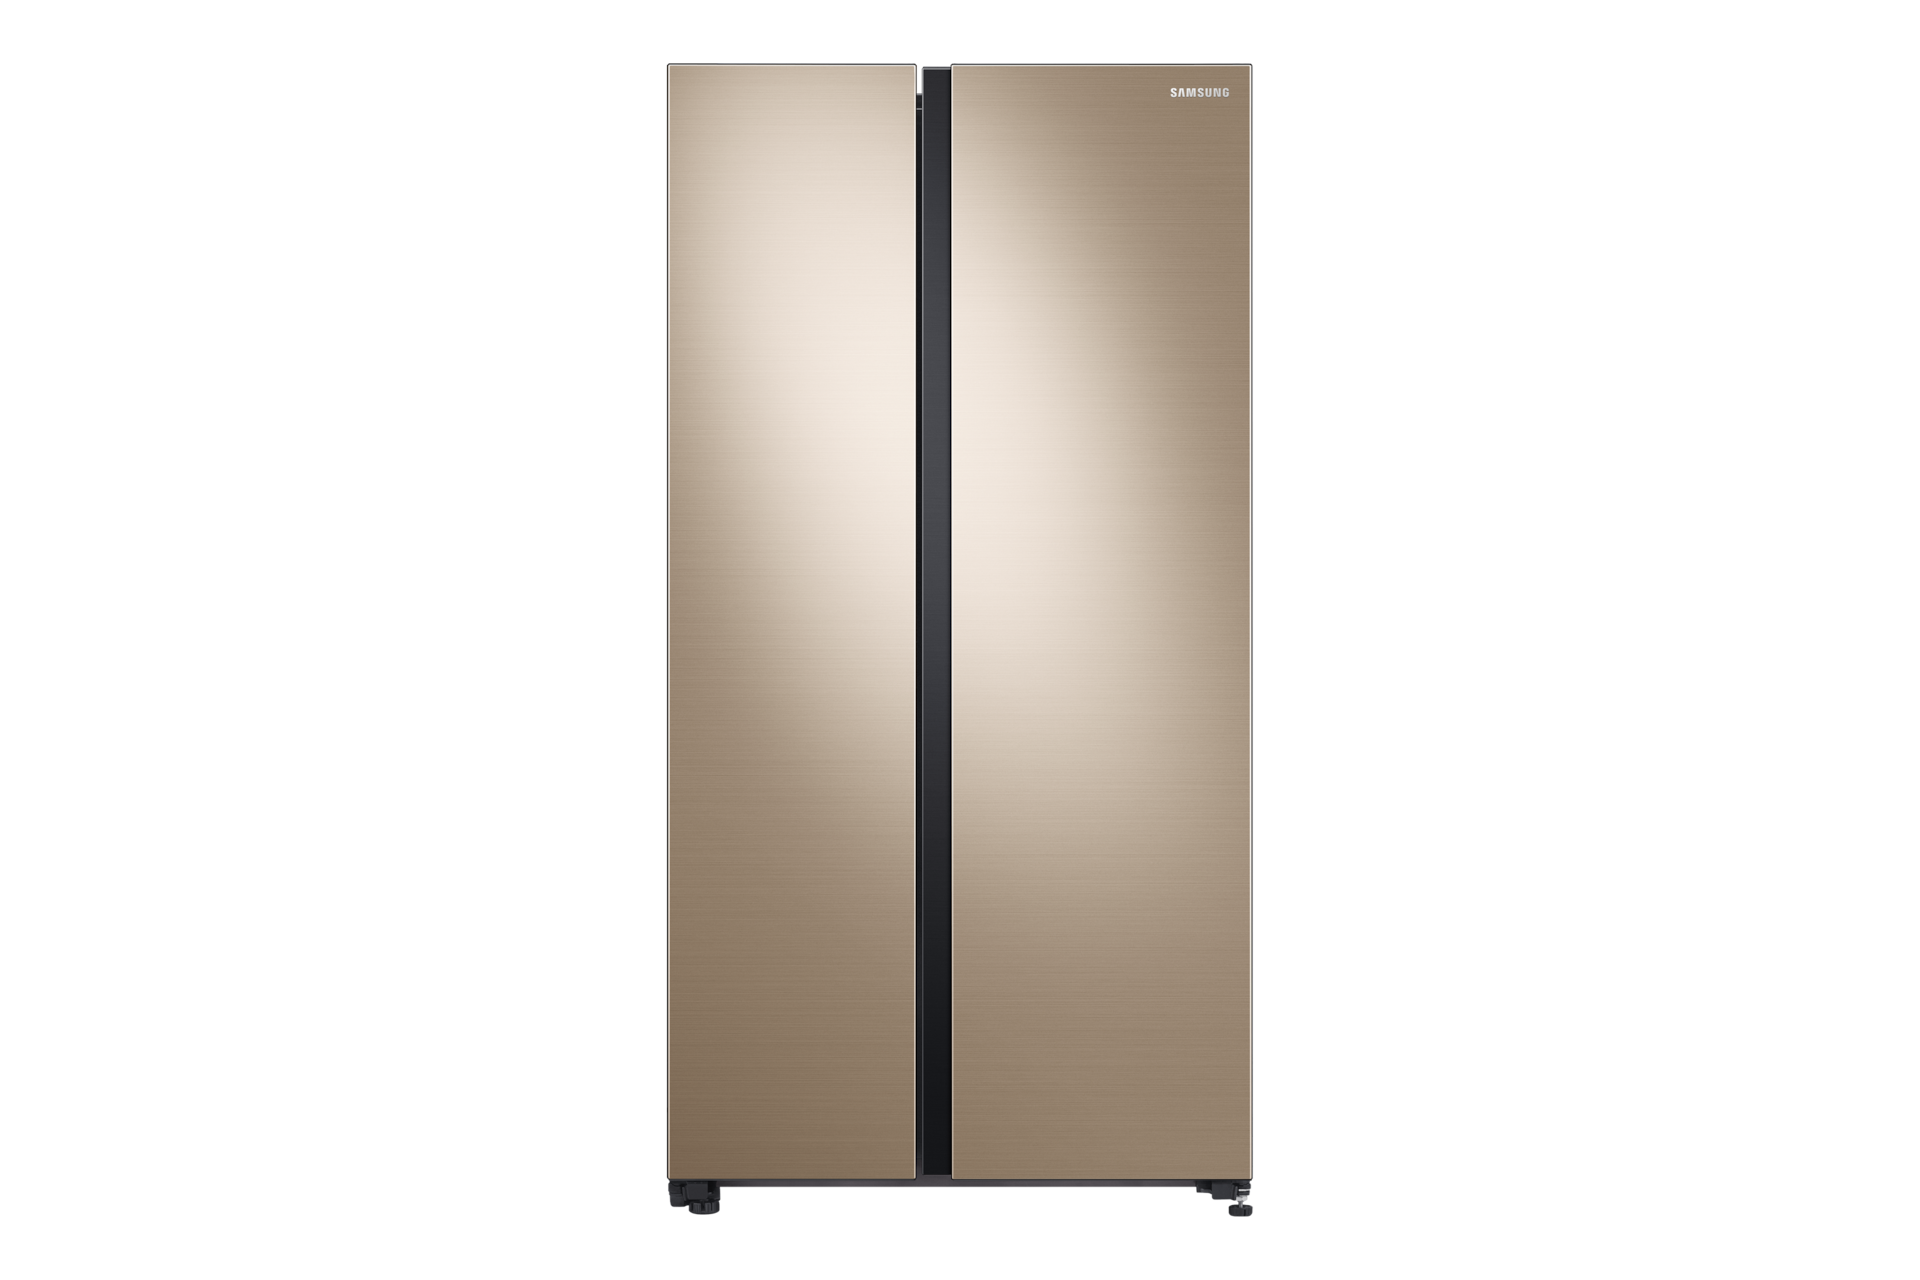 Samsung 647L Side by Side Refrigerator (3 Ticks) | Samsung Singapore